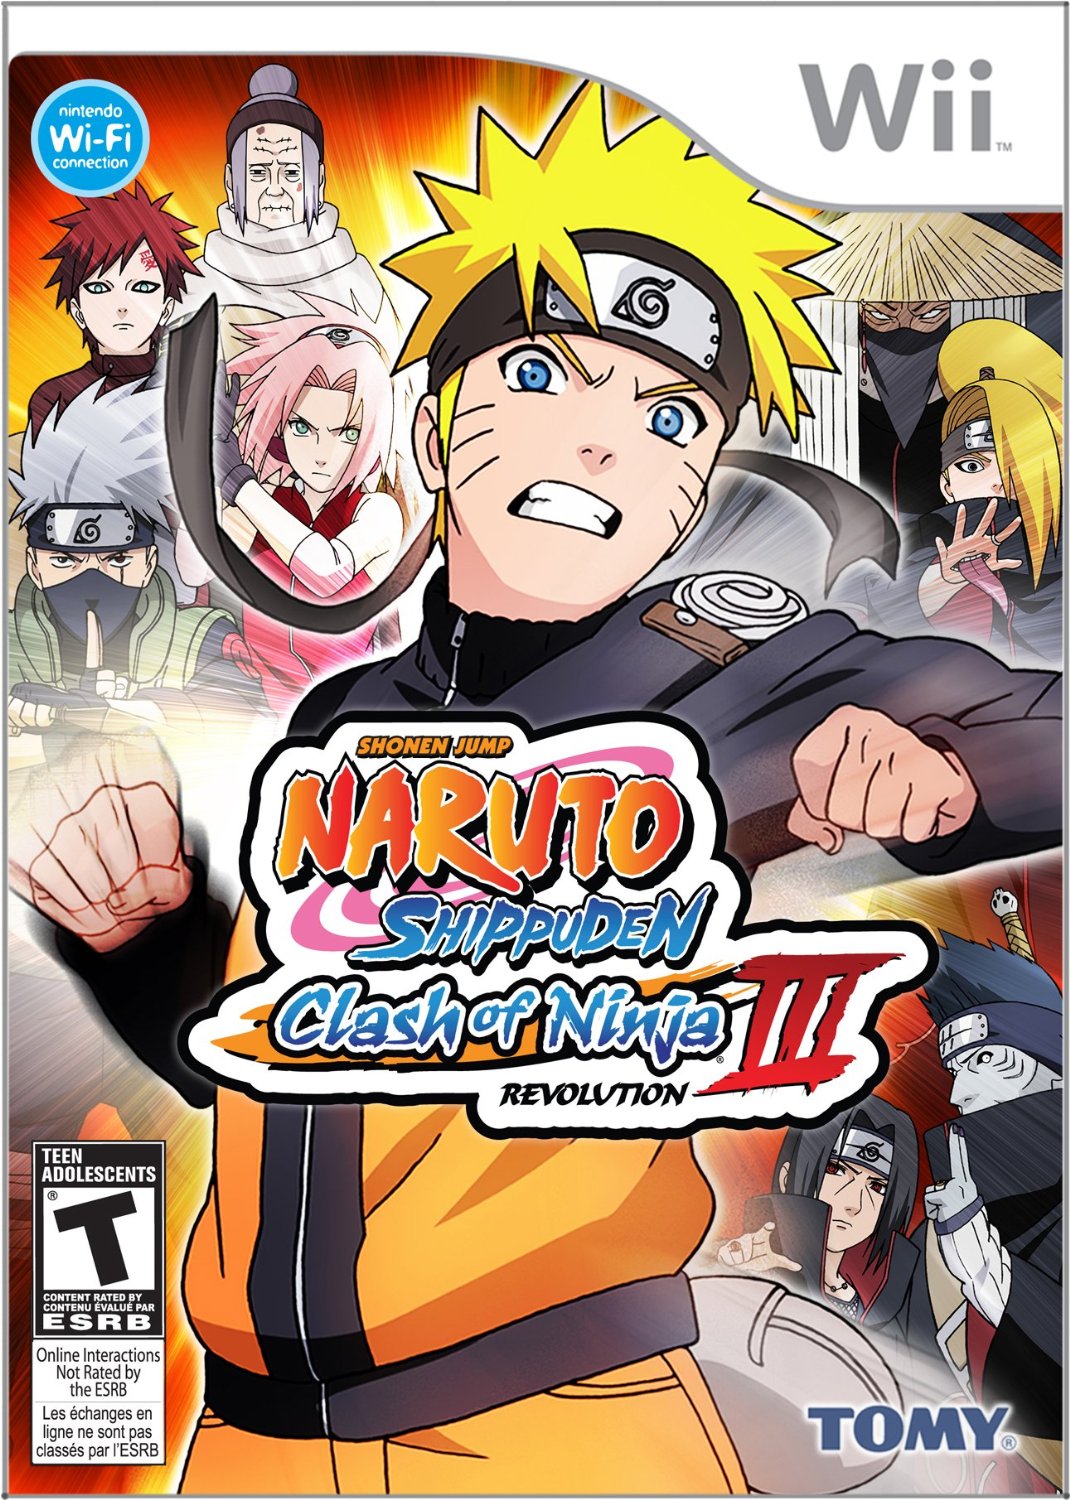 Naruto - Ultimate Ninja 3 ROM - PS2 Download - Emulator Games